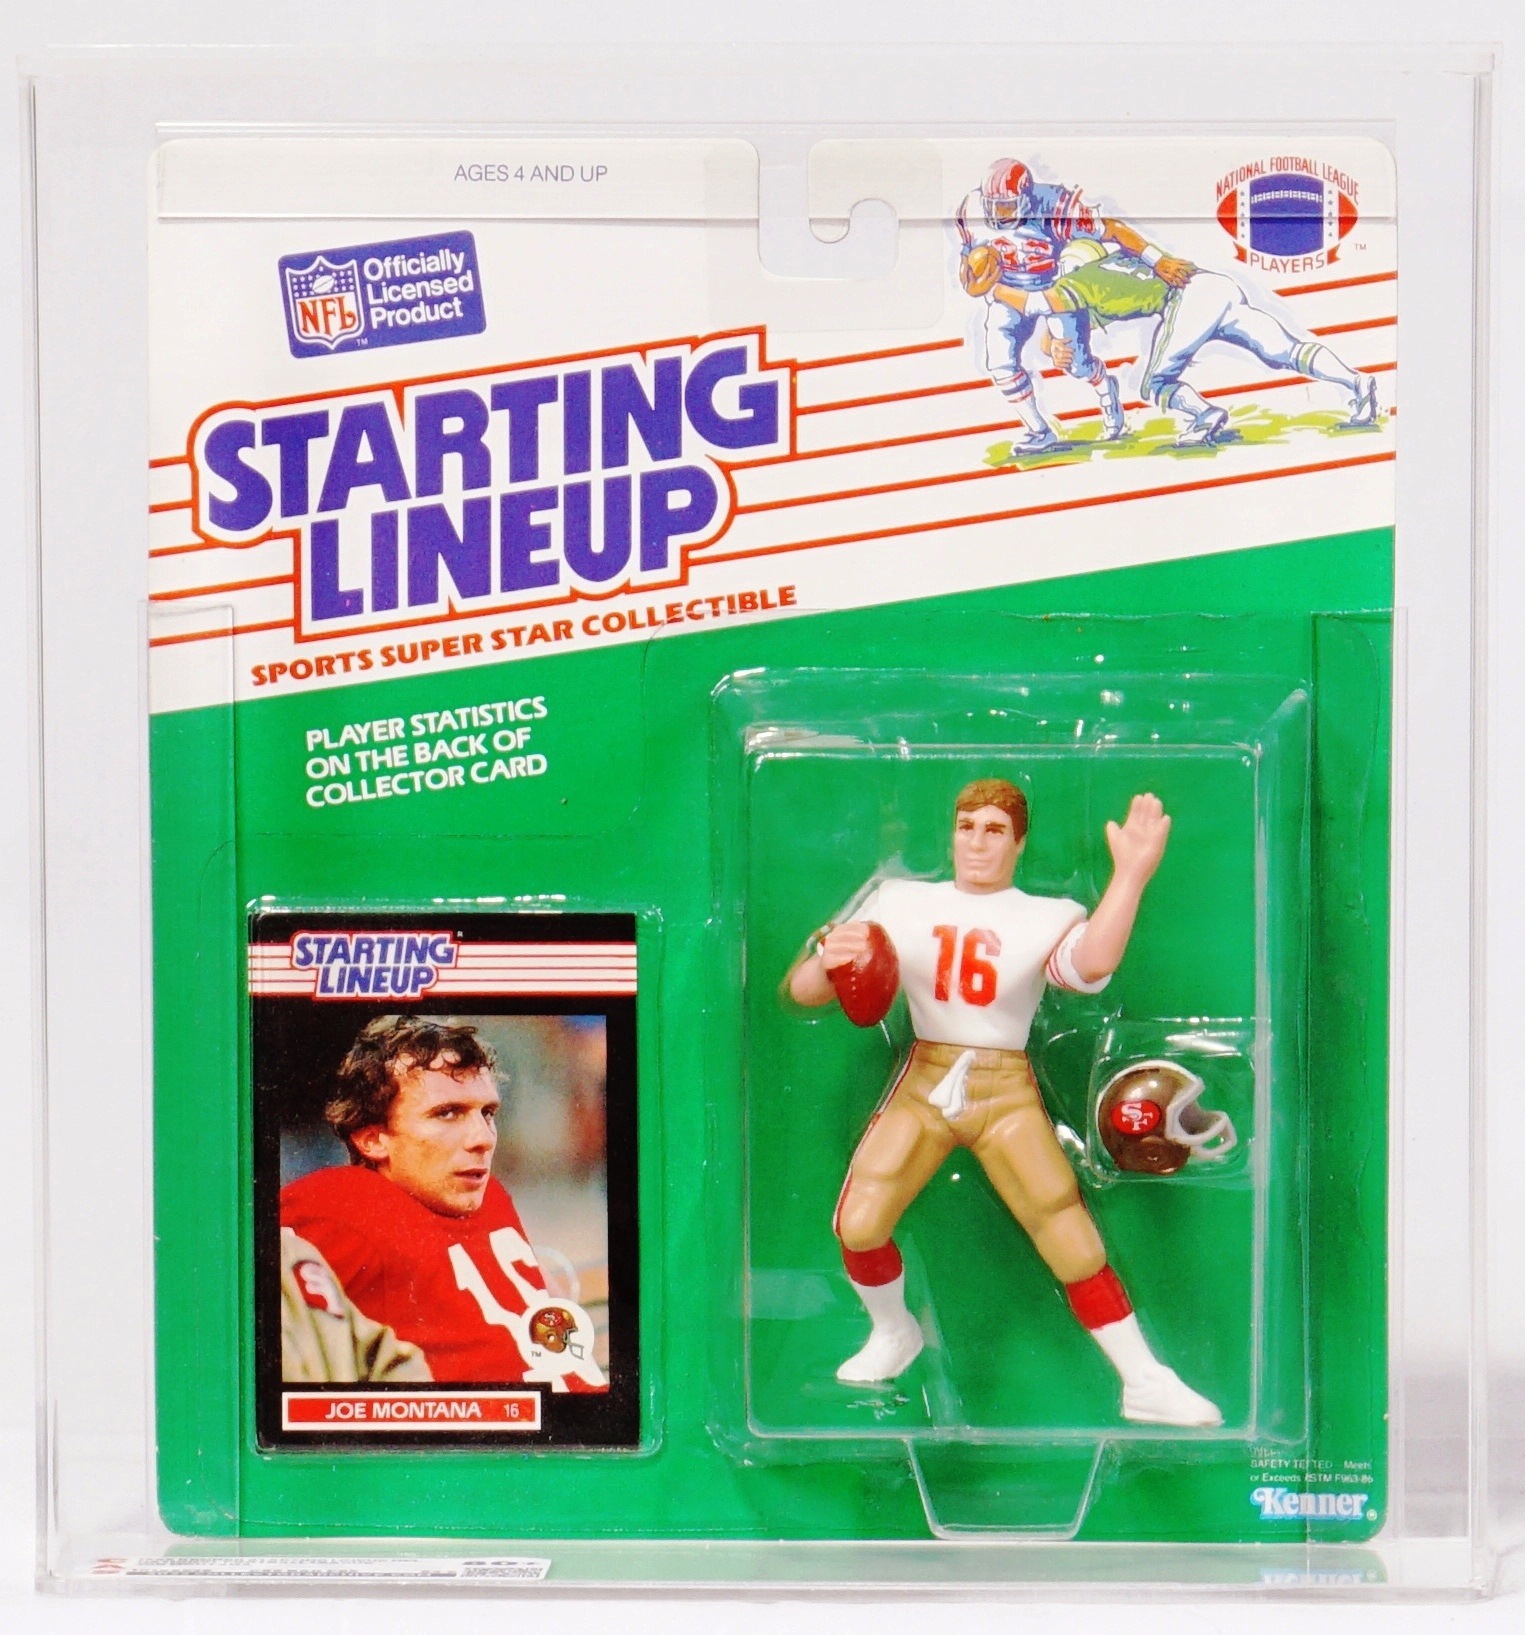 1989 Kenner Starting Lineup NFL Carded Sports Figure - Joe Montana